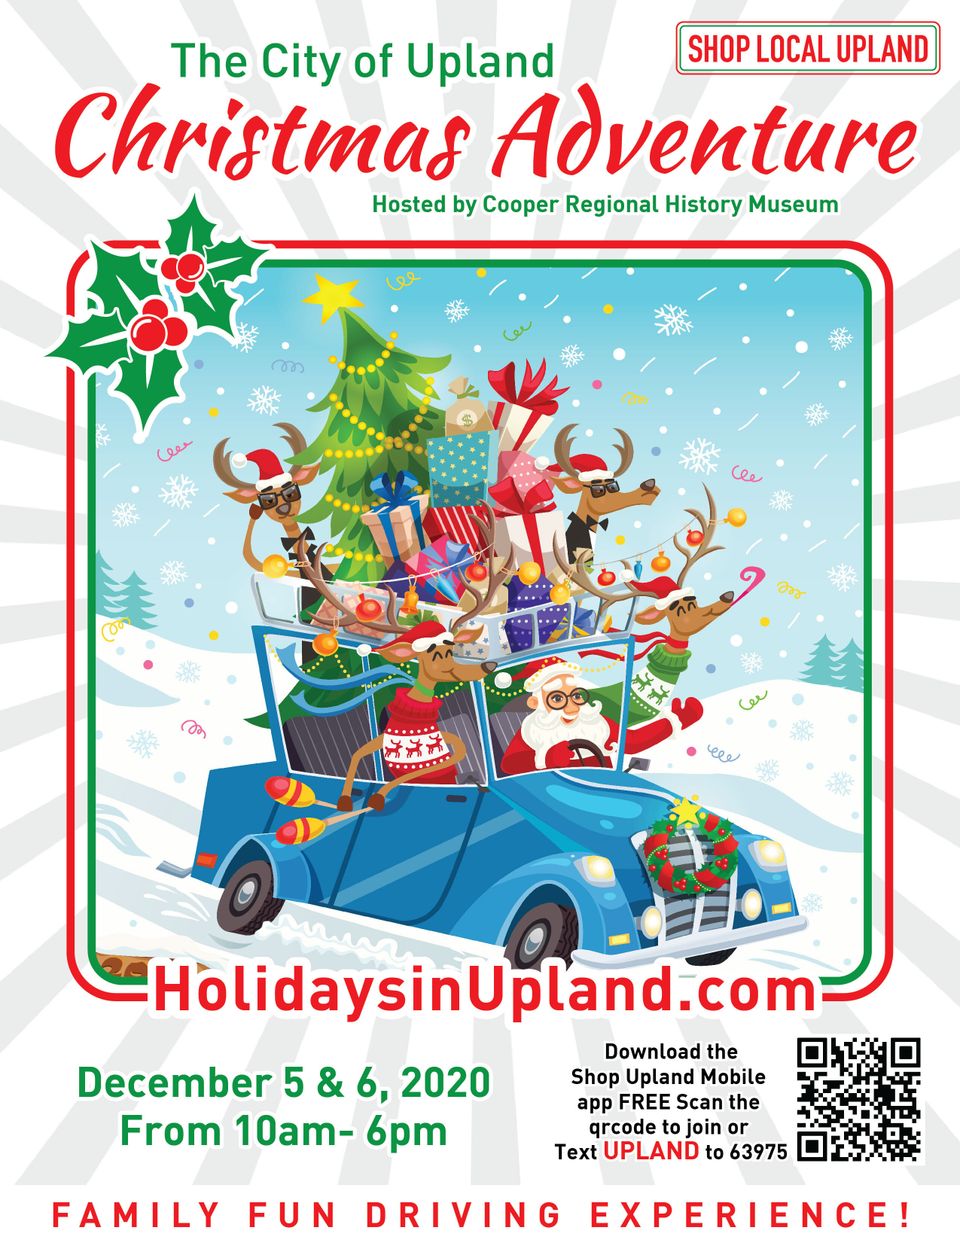 Upland christmasadventure20 v3 01 (1)